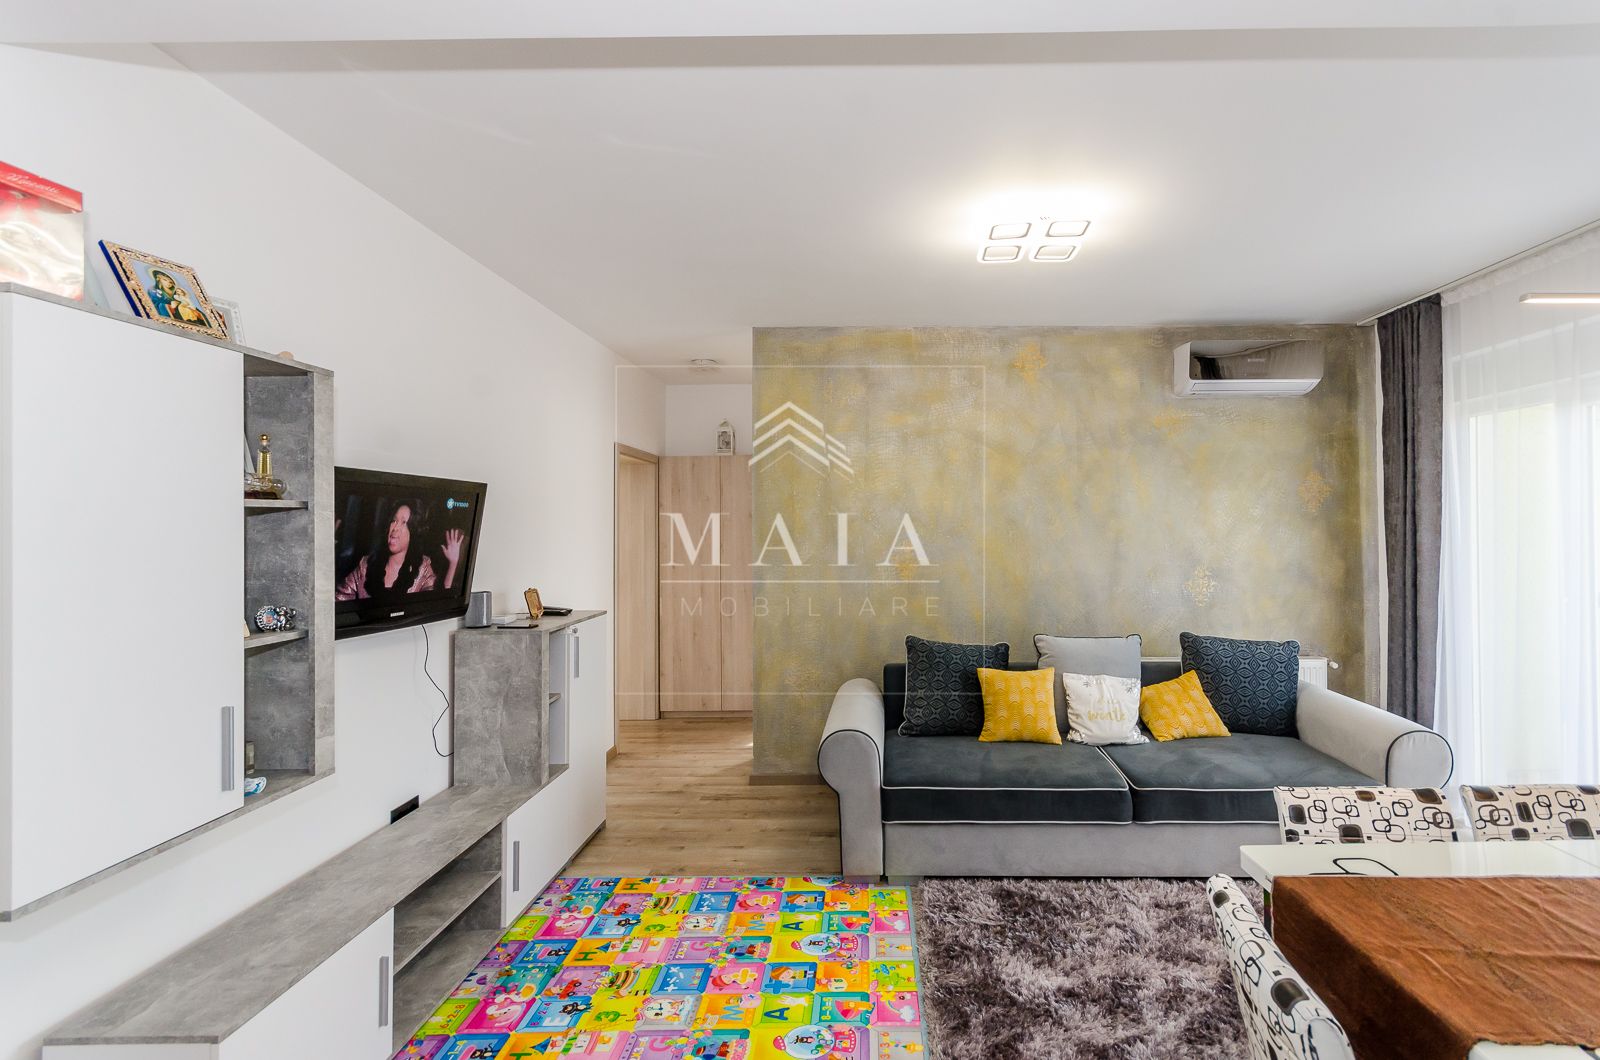 Apartament 3 camere, loc de parcare,mobilat complet,Triajului-Selimbar